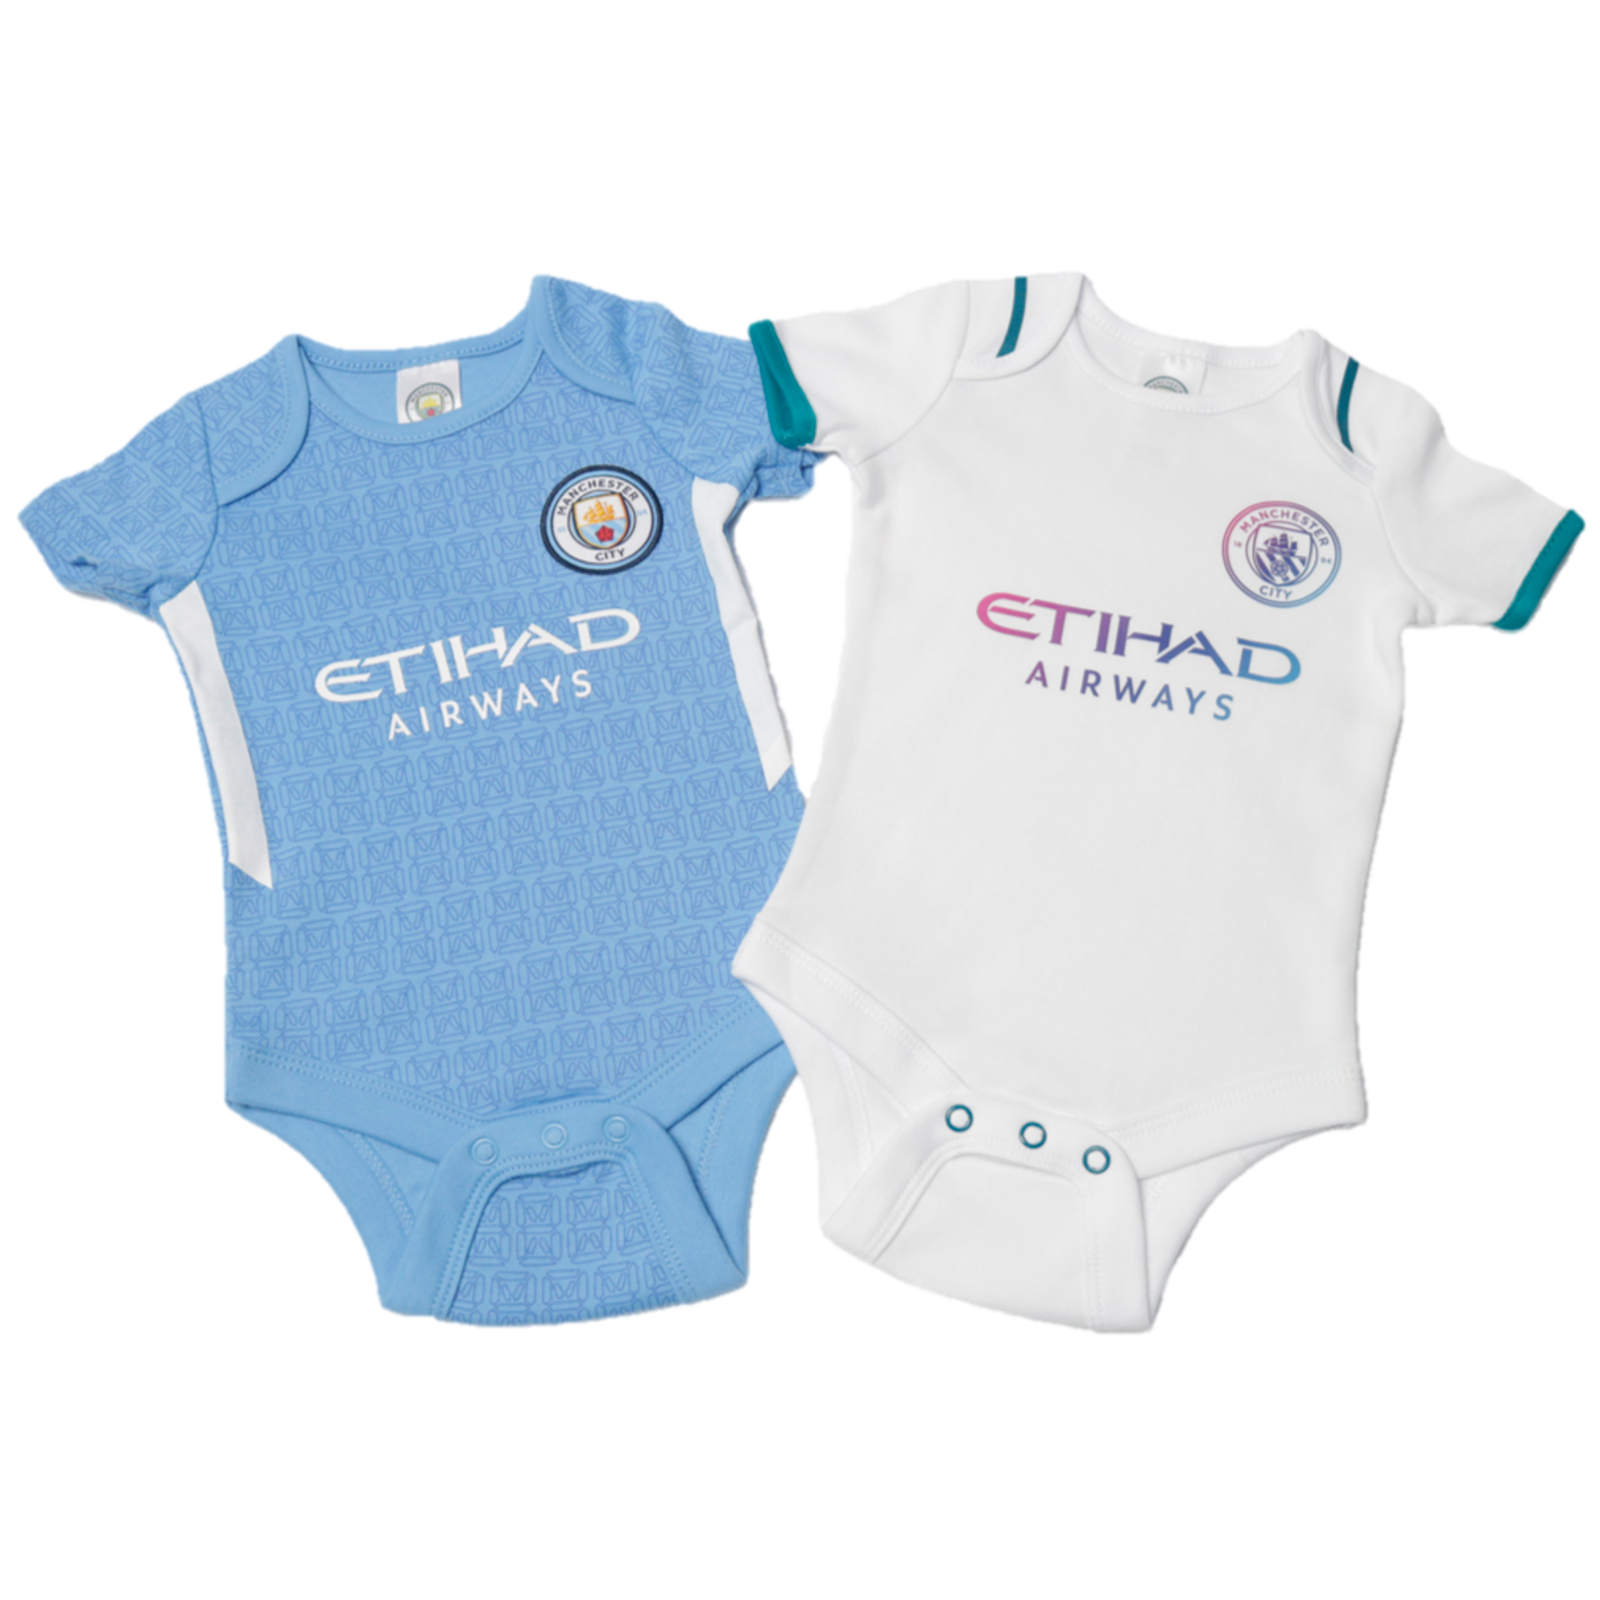 Man city football Club Baby Kit 2 pack bodysuit set MC2021 